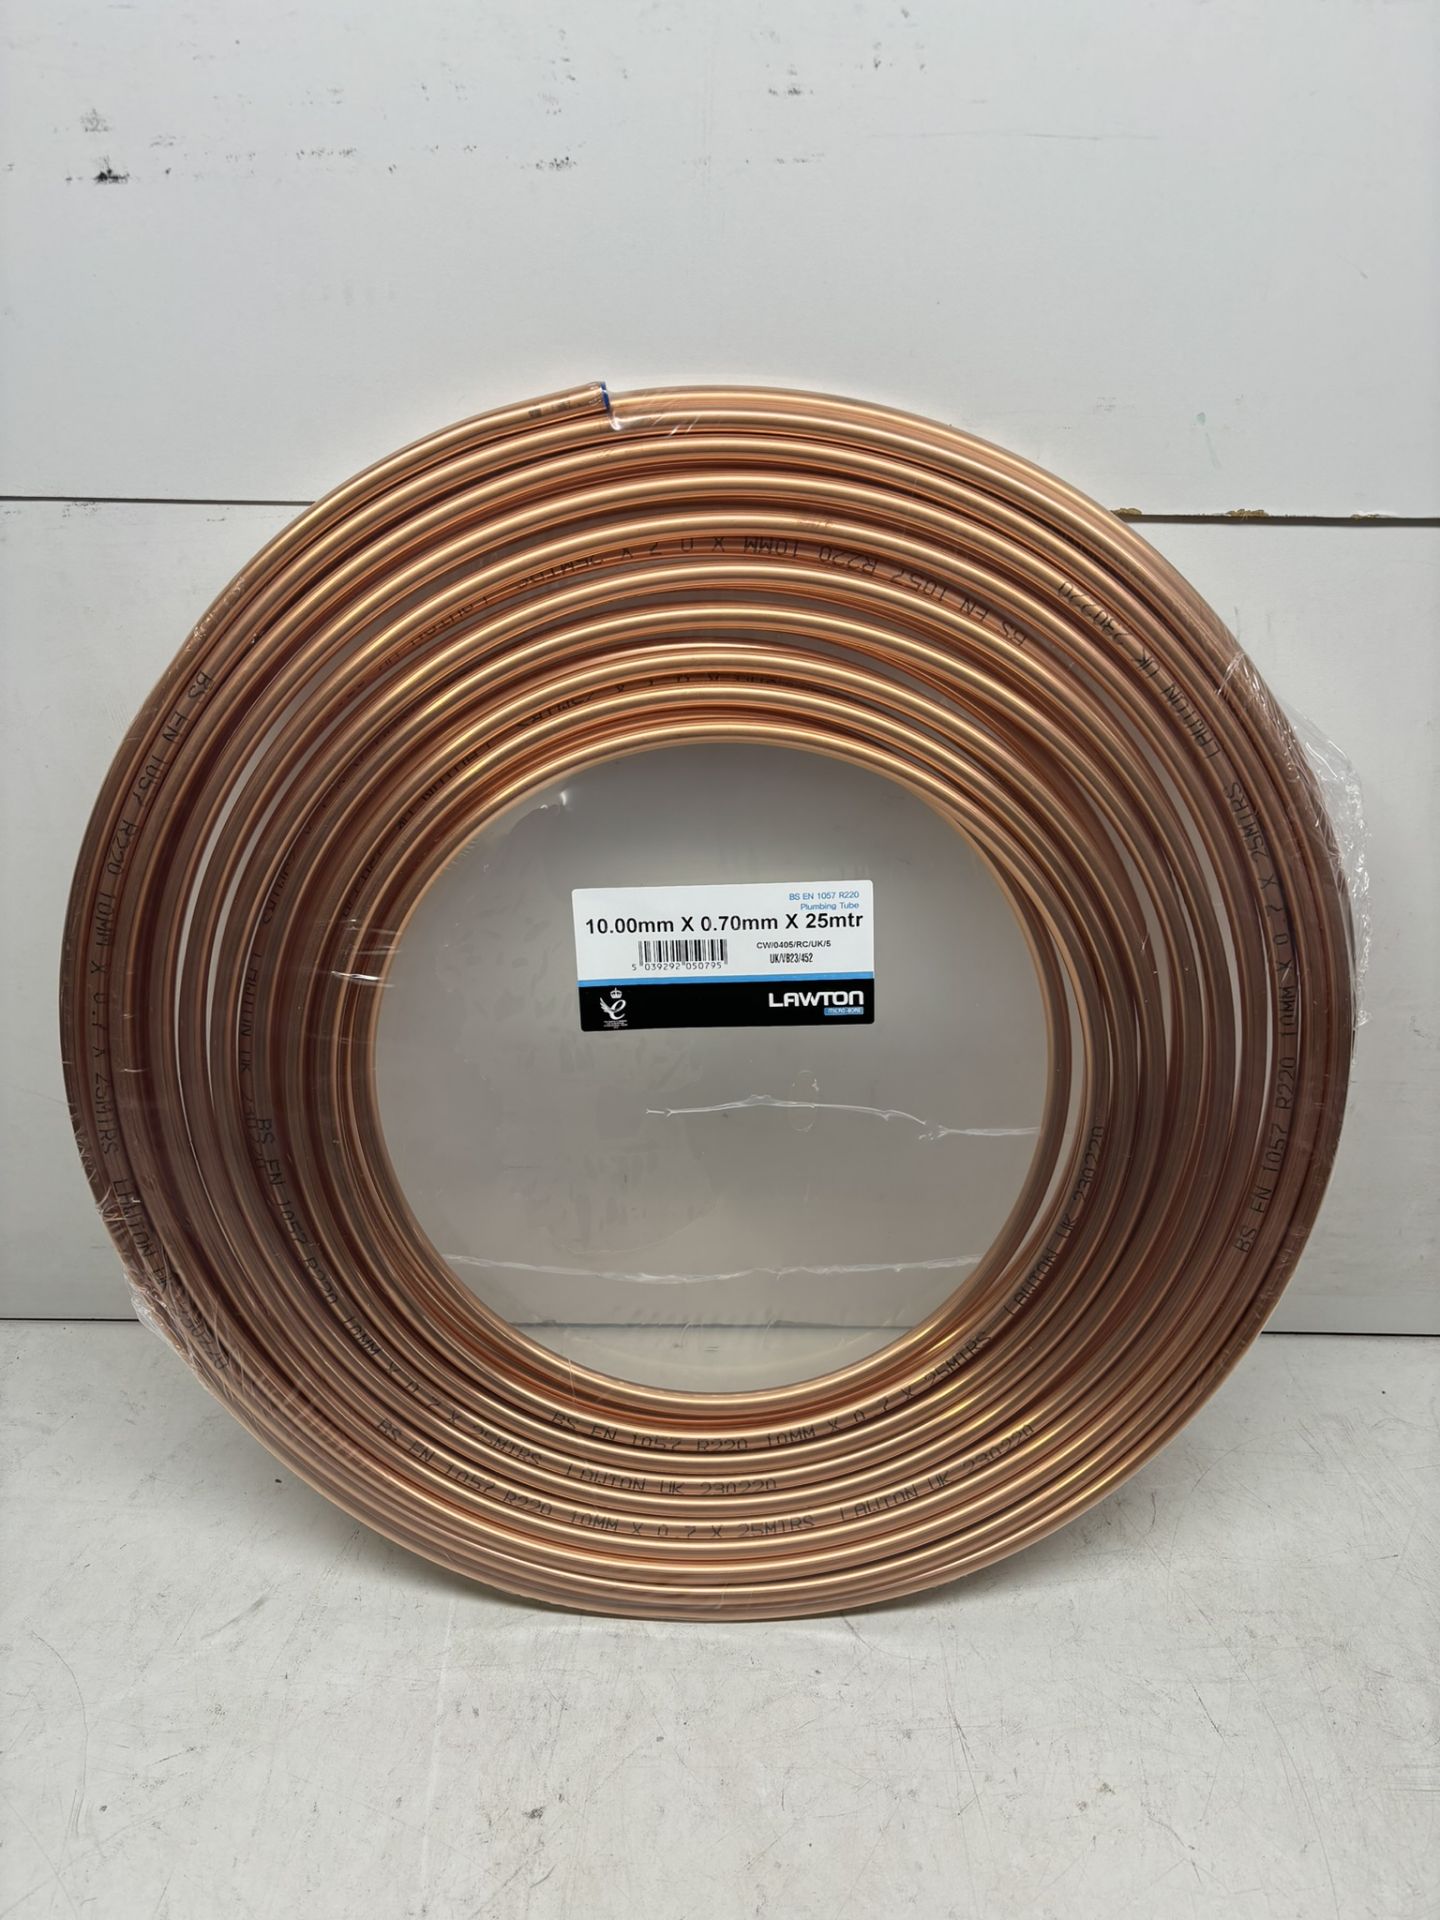 3 x Lawton 10.00mm x 0.70mm x 25Mtr Copper Plumbing Tube Coils - Image 3 of 9